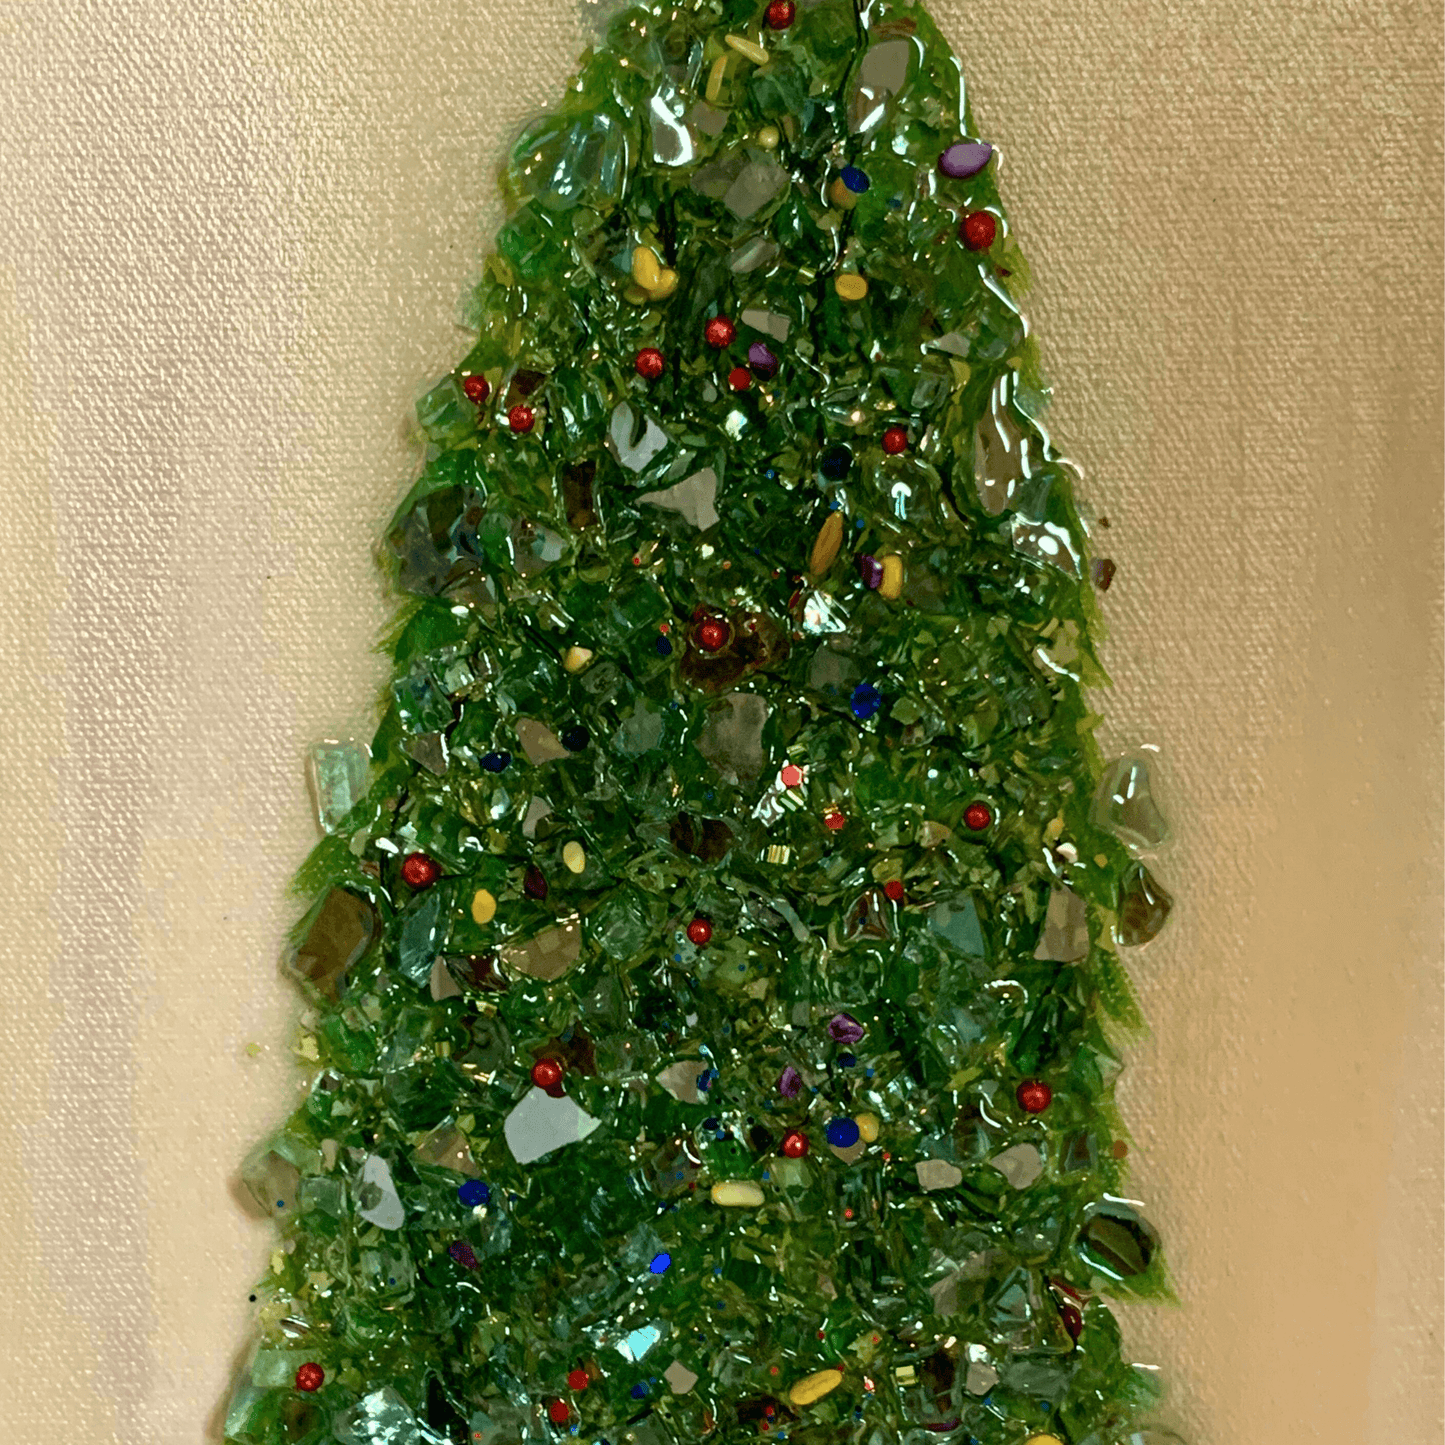 OH CHRISTMAS TREE- Light Up Mixed Media Resin Art Christmas Decoration